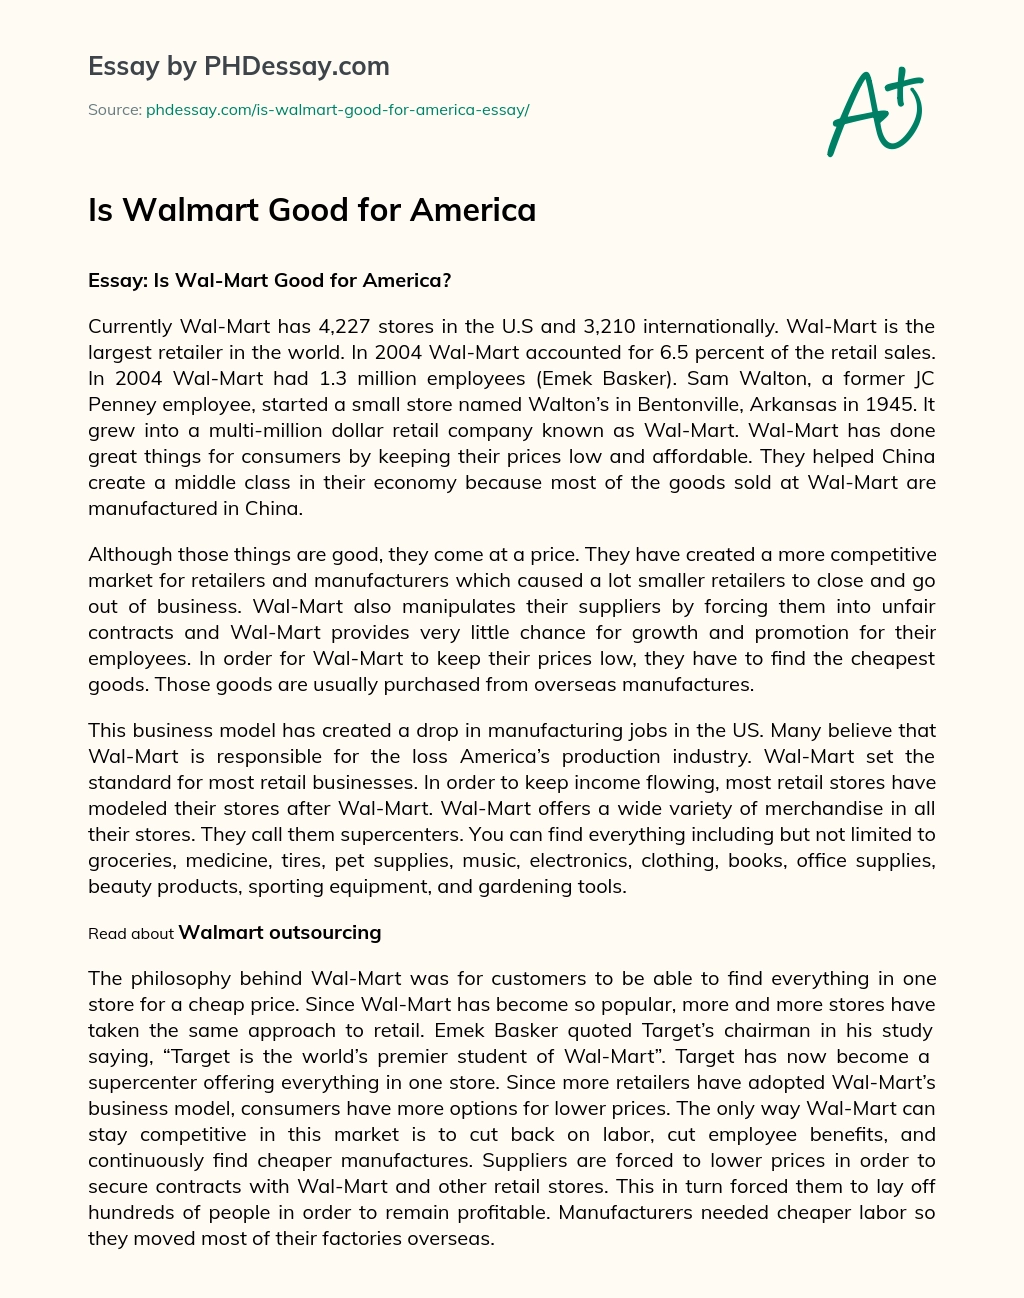 Is Walmart Good for America essay